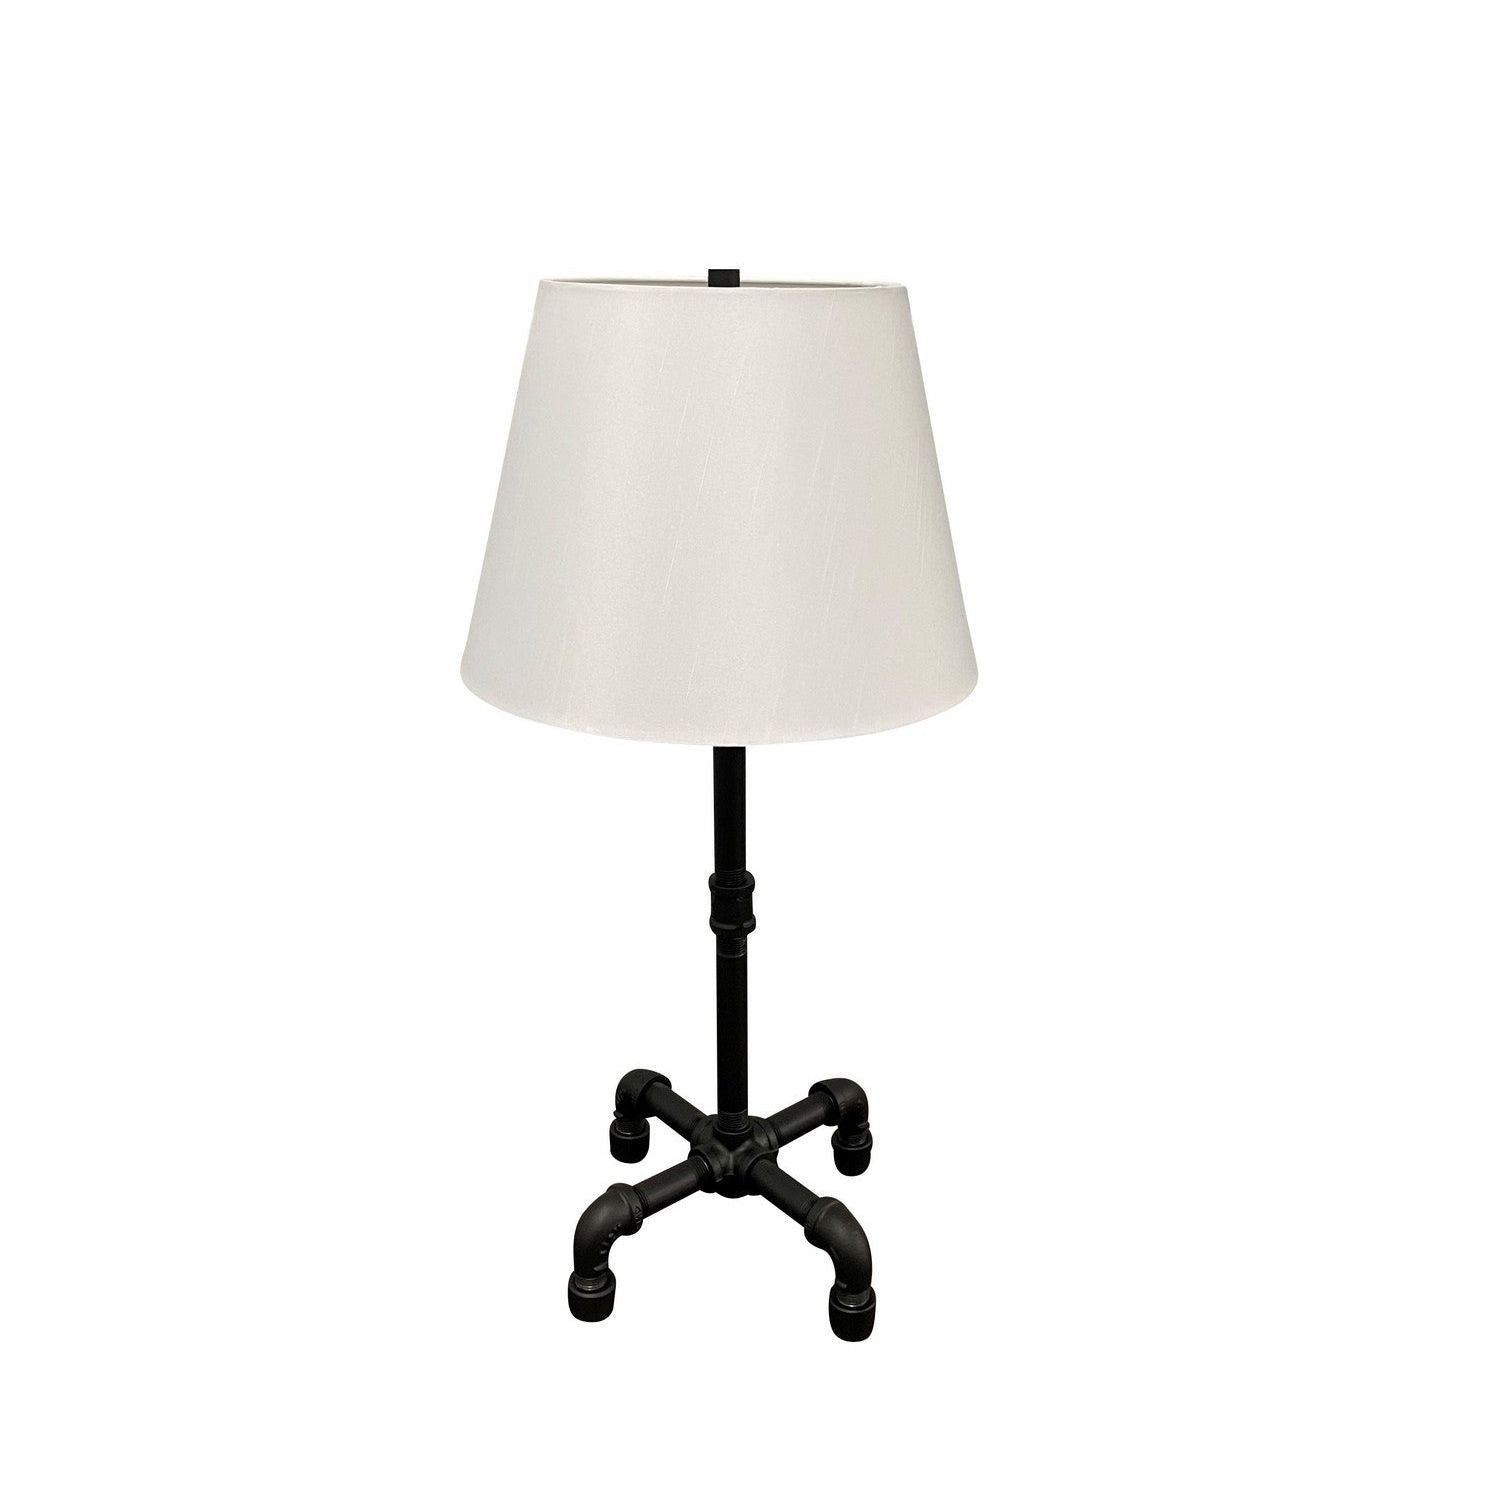 House of Troy - ST650-BLK - One Light Table Lamp - Studio - Black